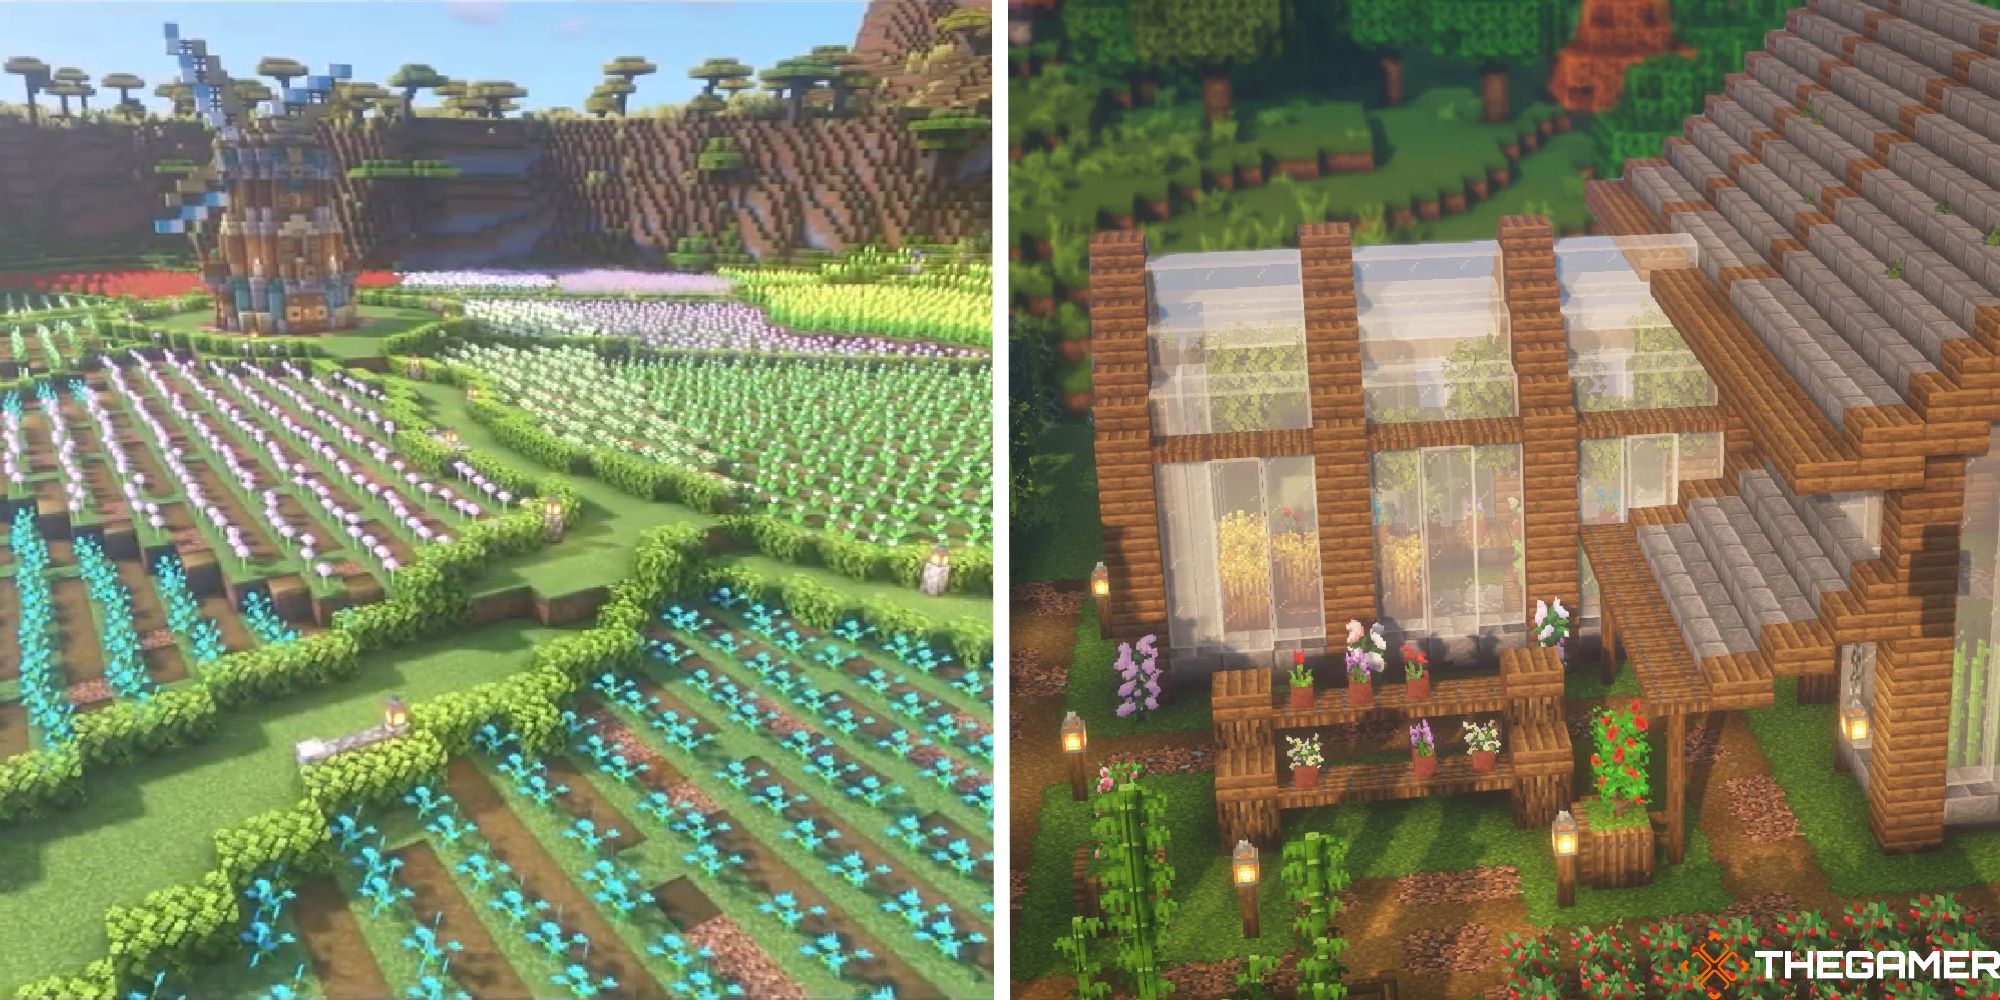 minecraft split image showing flower garden next to image of greenhouse